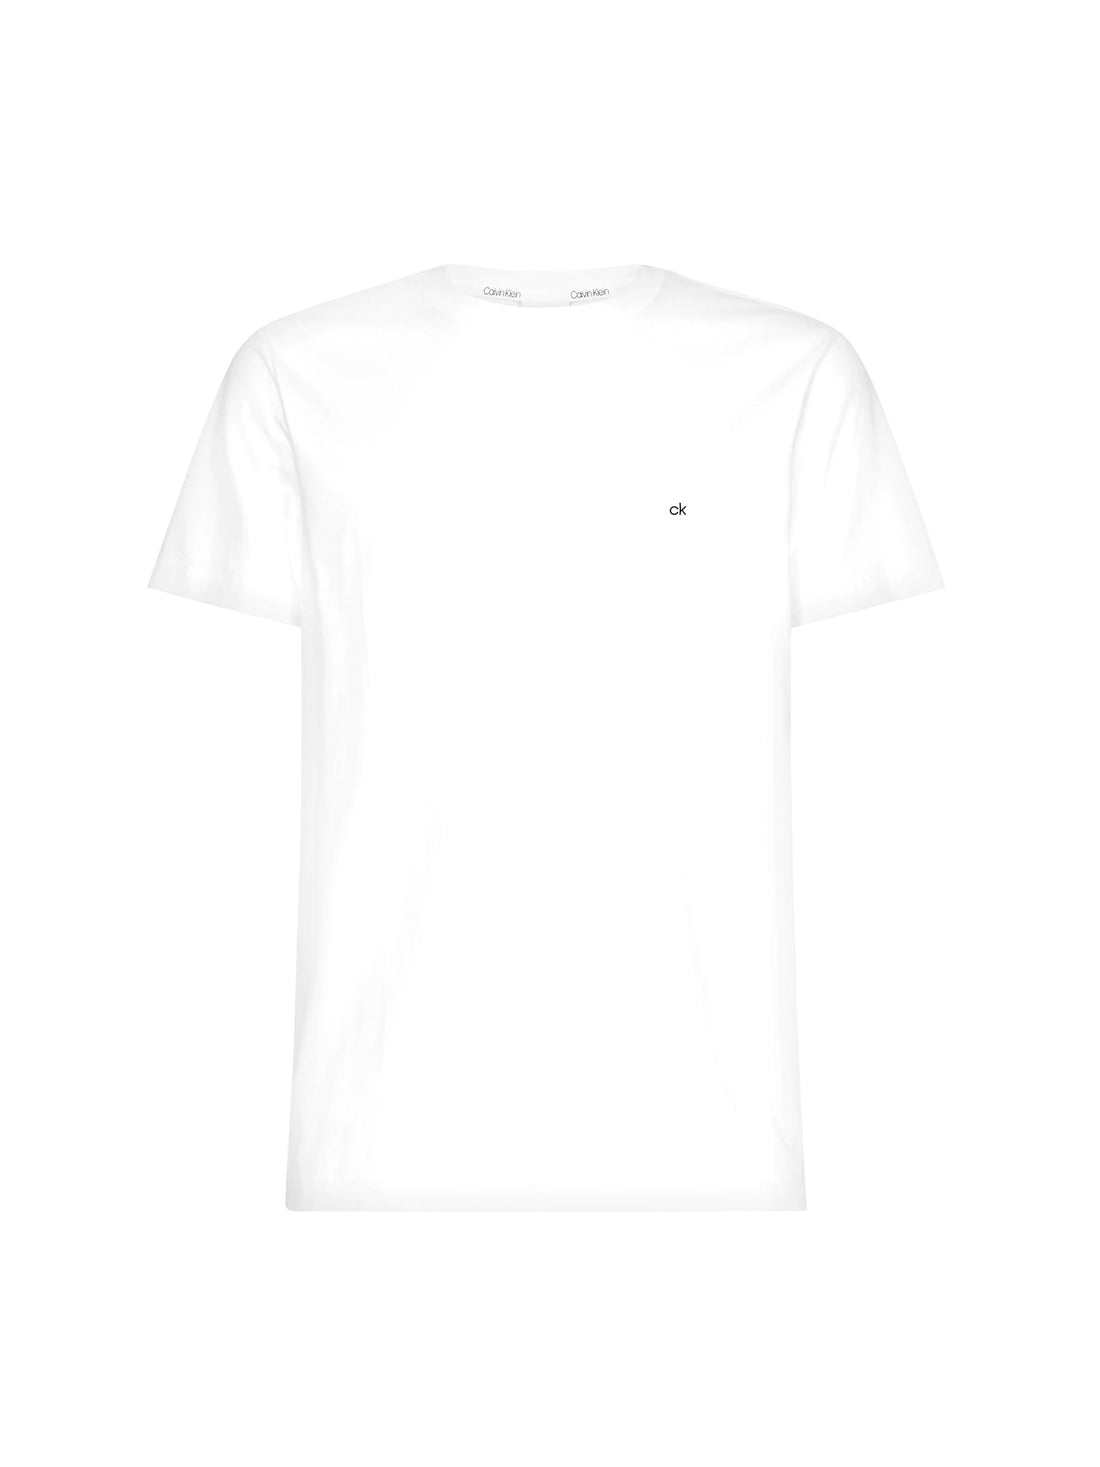 T-shirt Bianco Calvin Klein